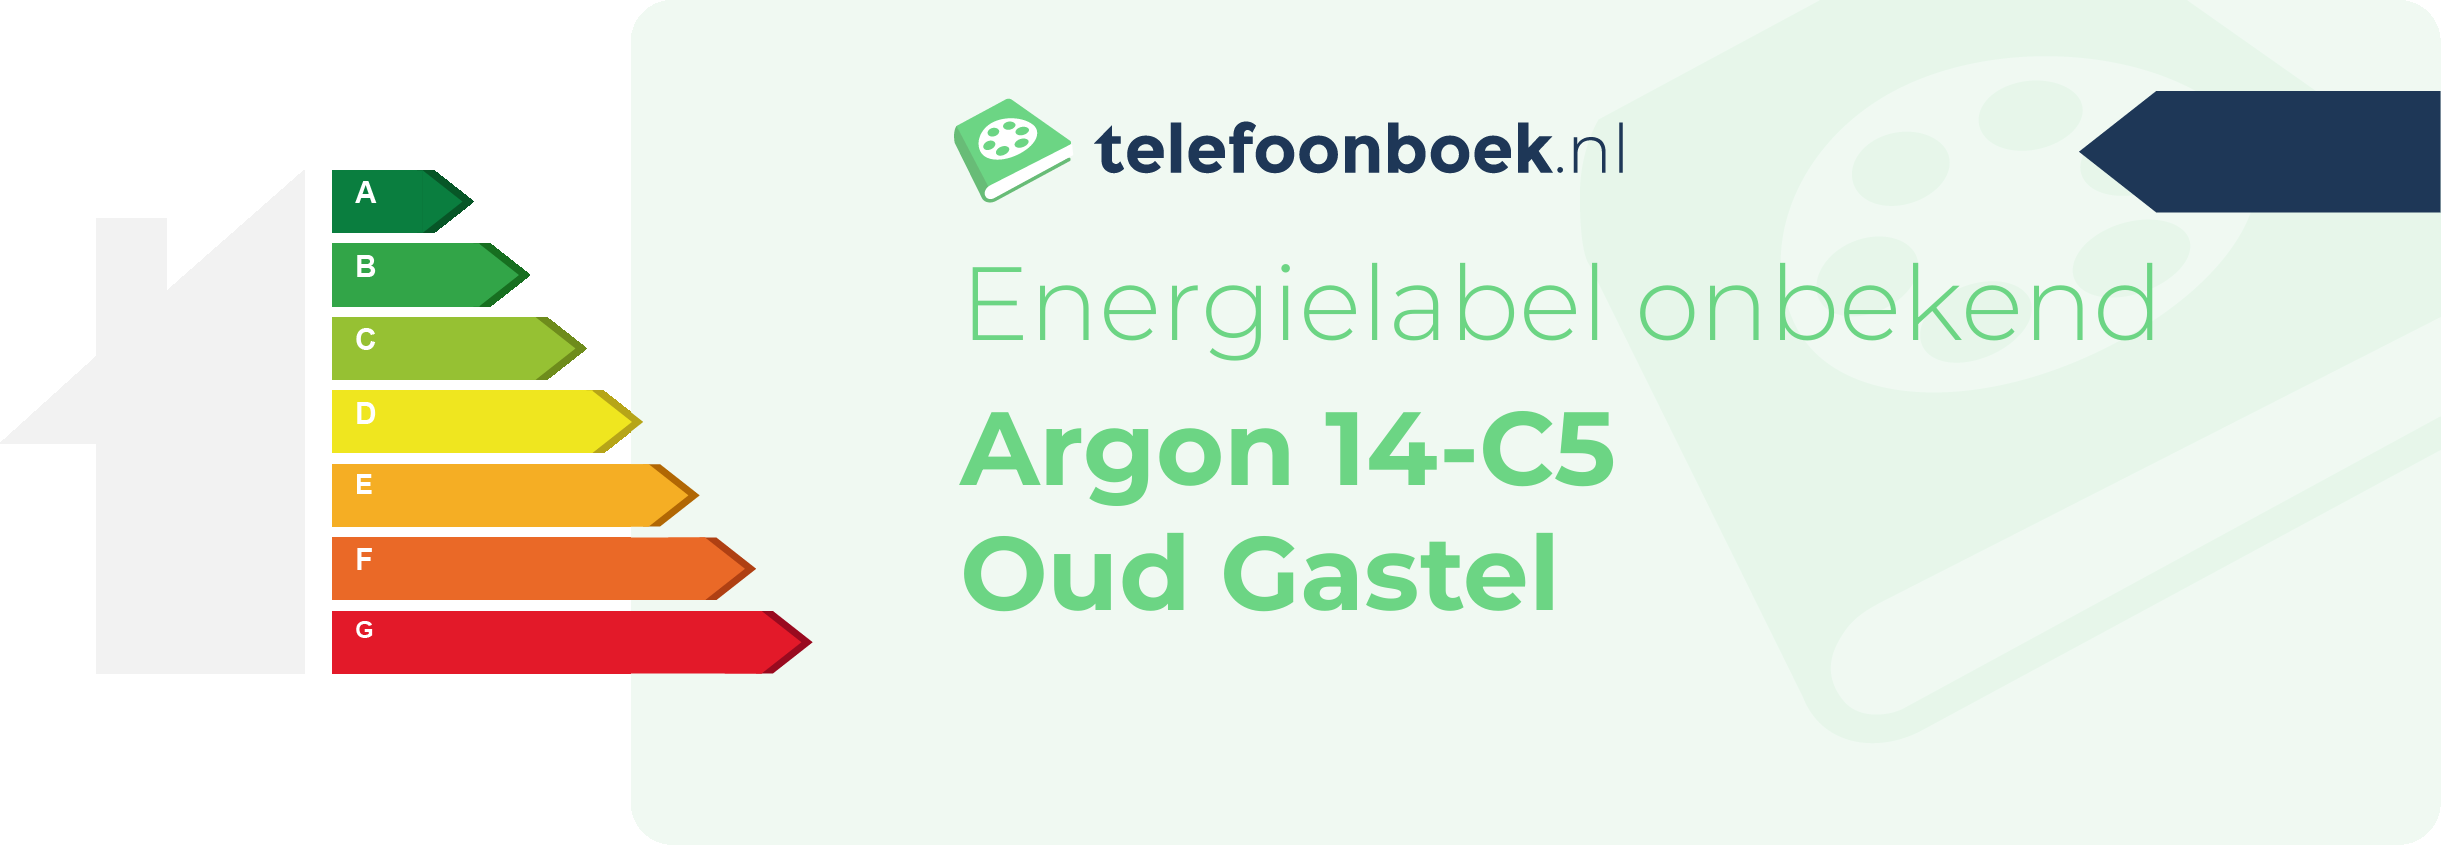 Energielabel Argon 14-C5 Oud Gastel